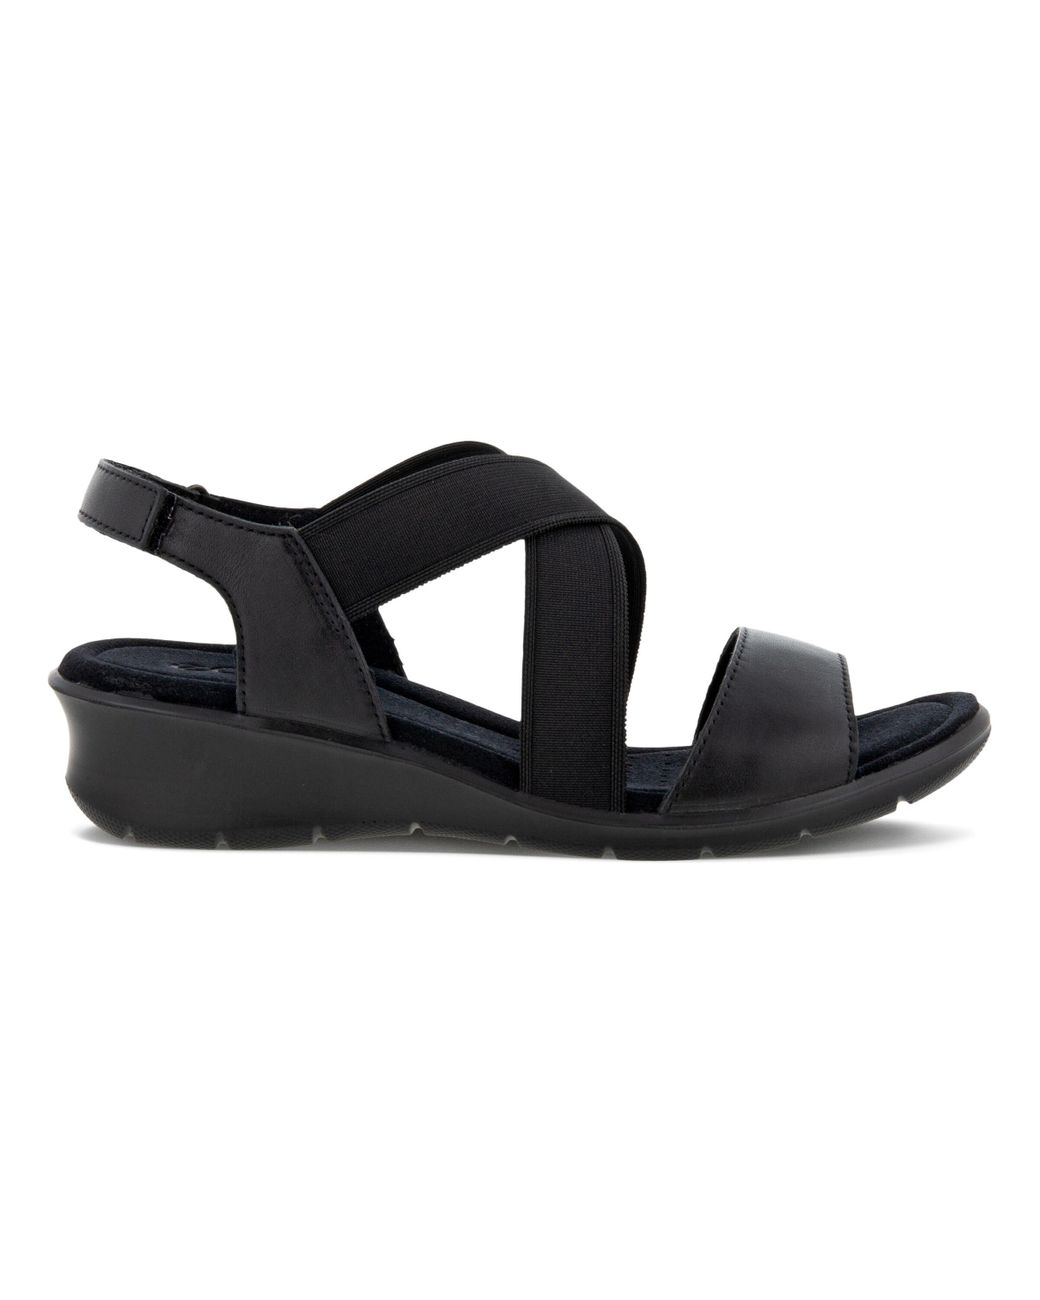 Ecco Finola Wedge Sandals Size in Black - Lyst